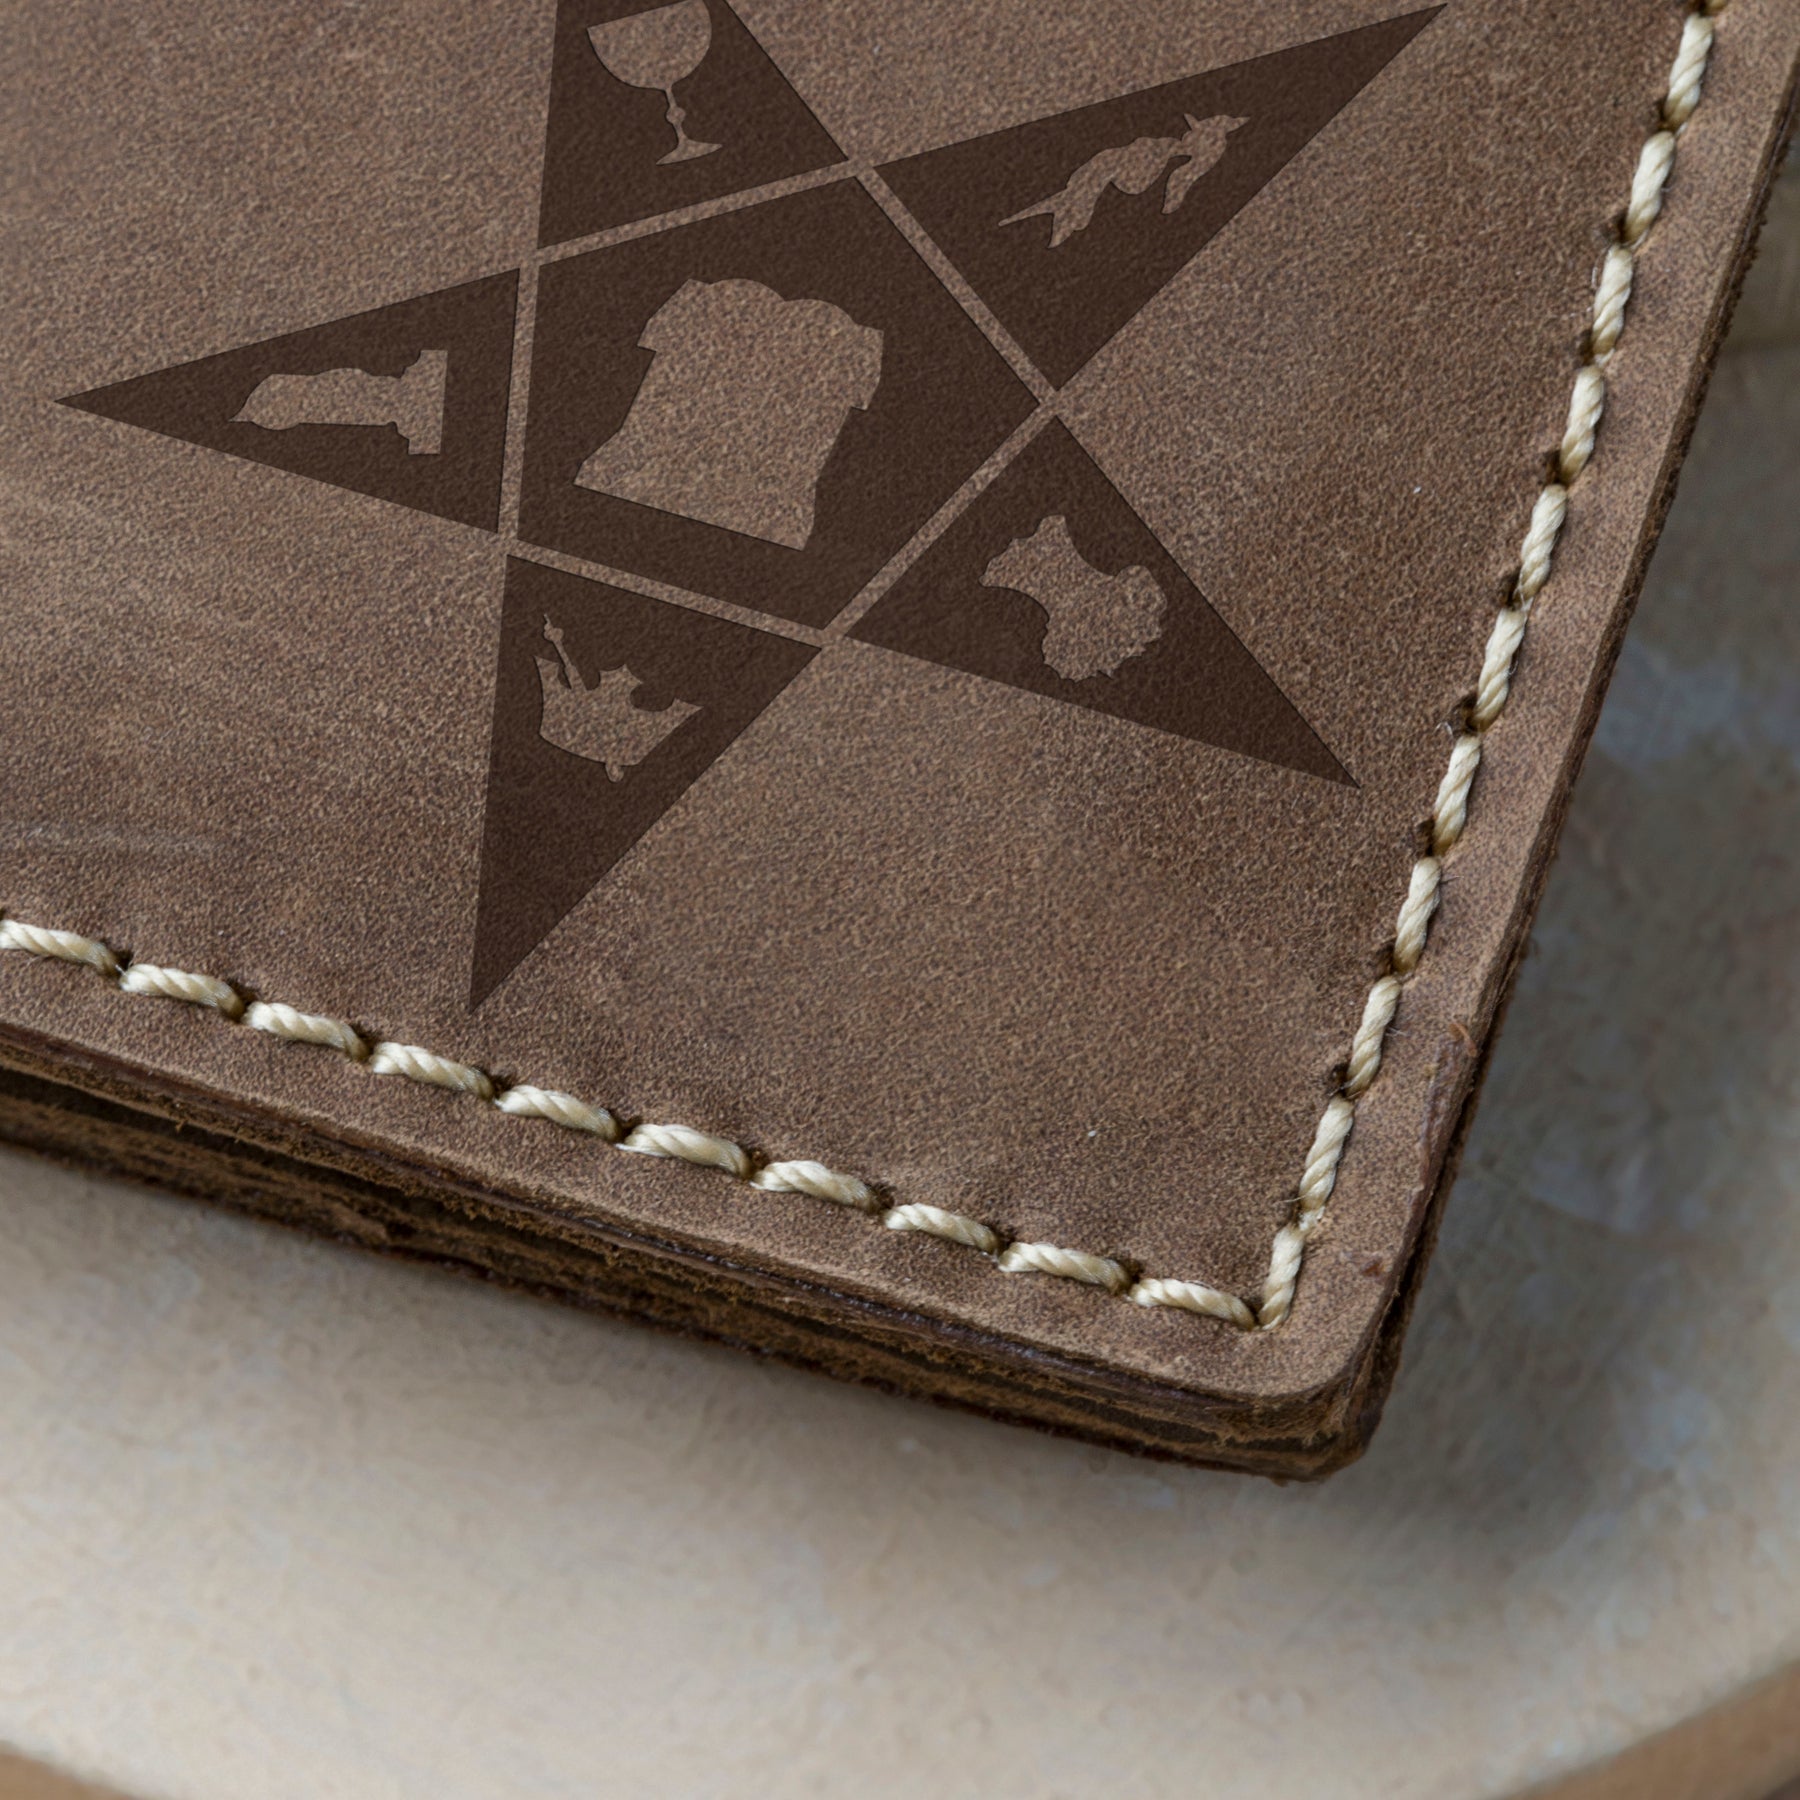 OES Wallet - Handmade Leather - Bricks Masons